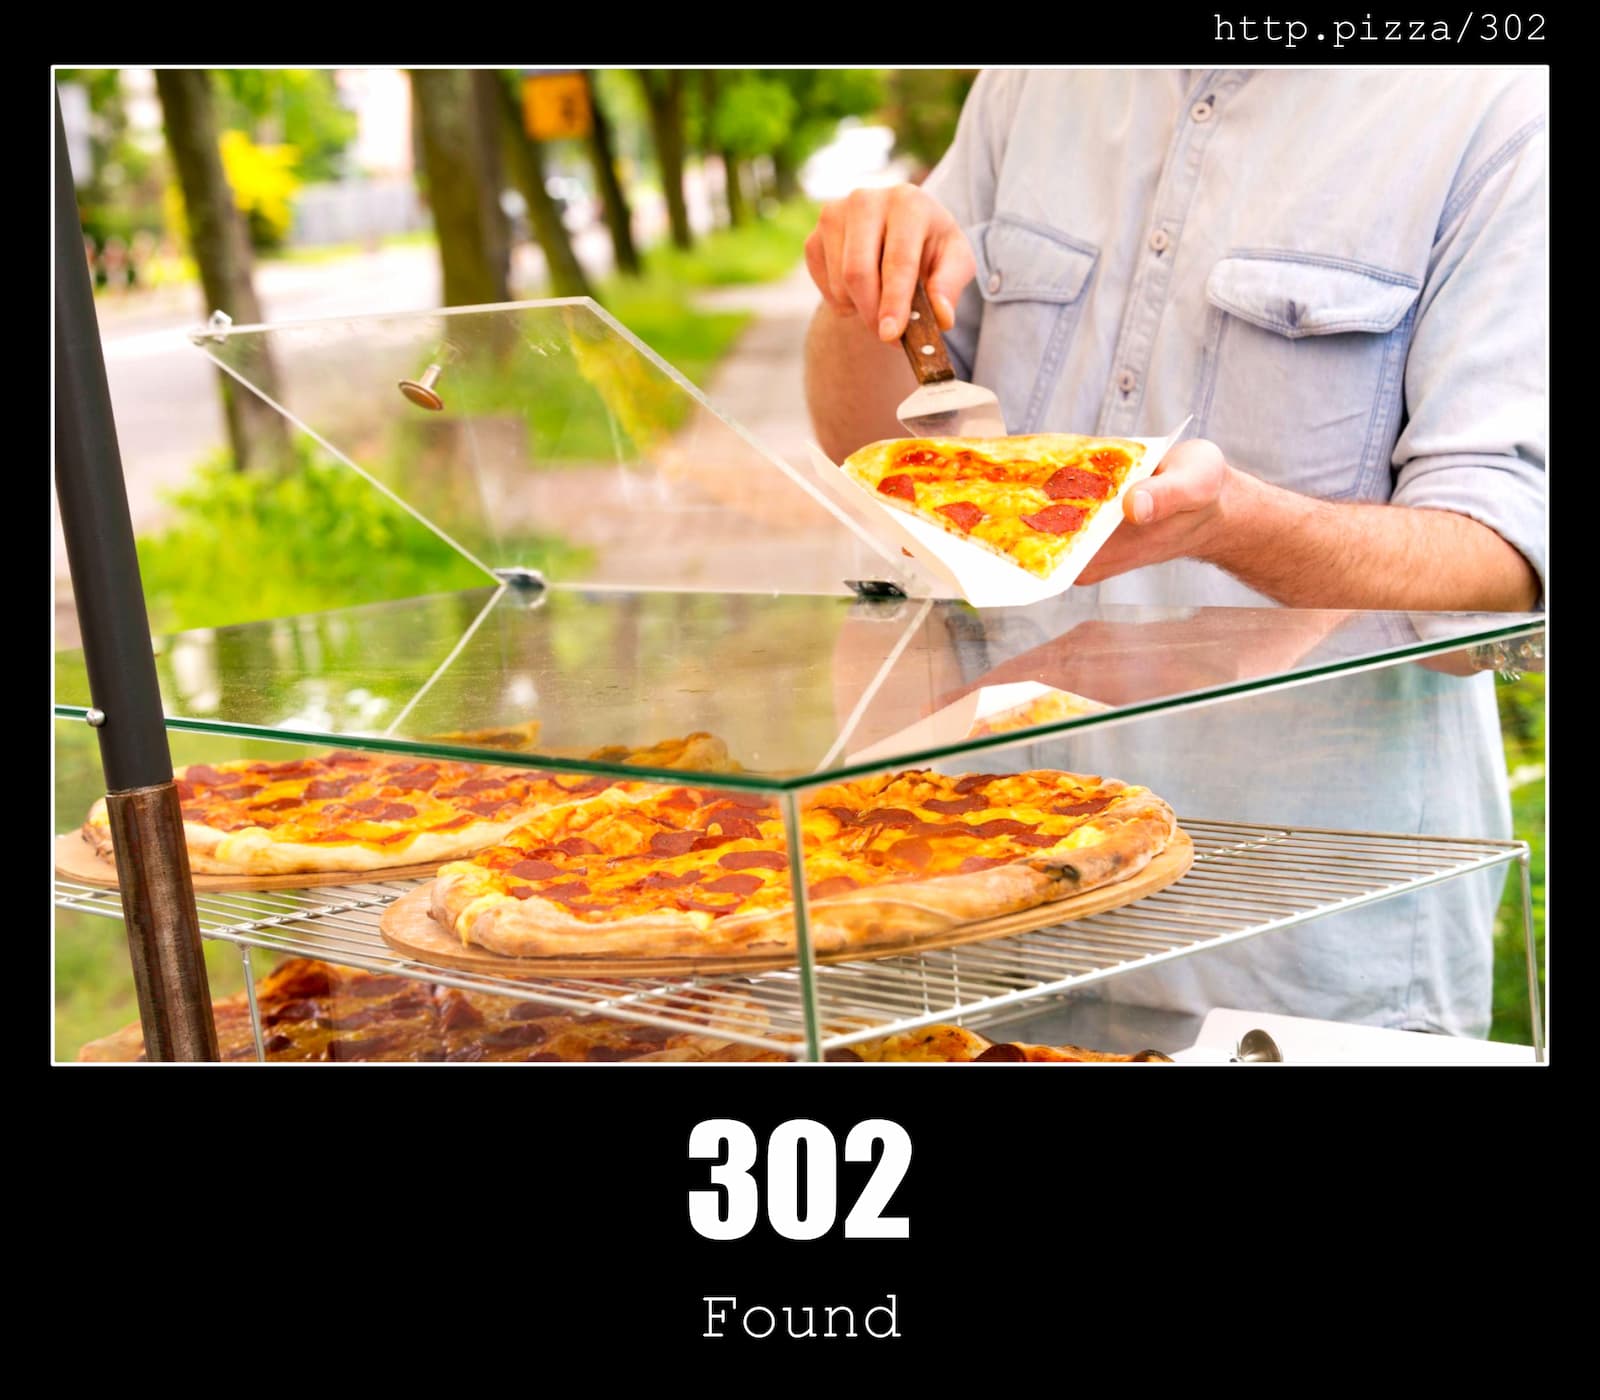 HTTP Status Code 302 Found & Pizzas